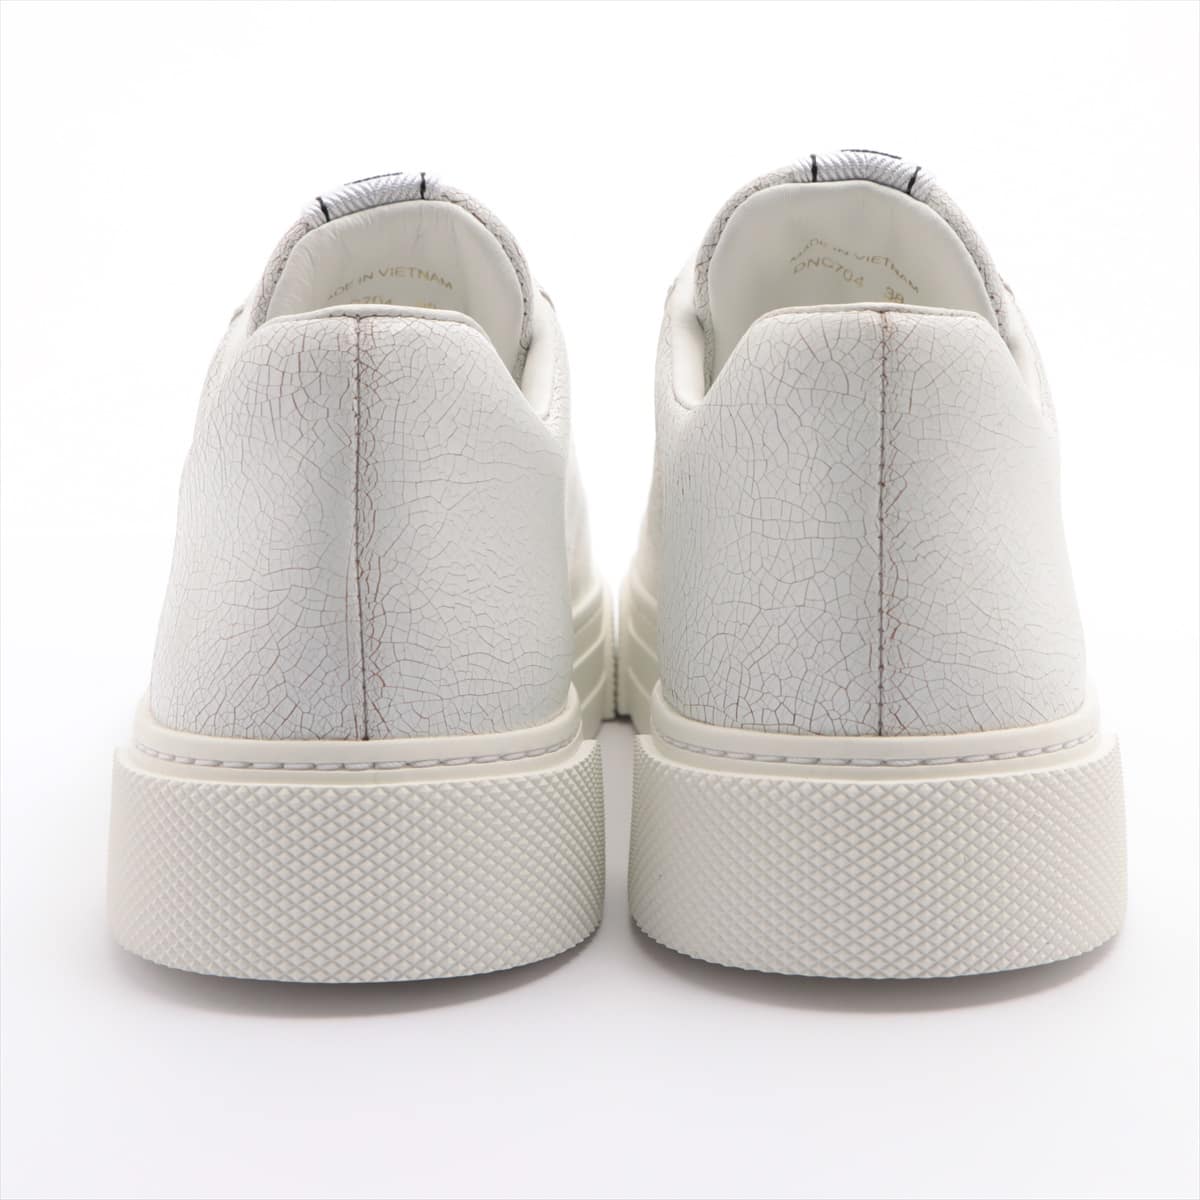 Miu Miu Leather Sneakers 38 Ladies' White